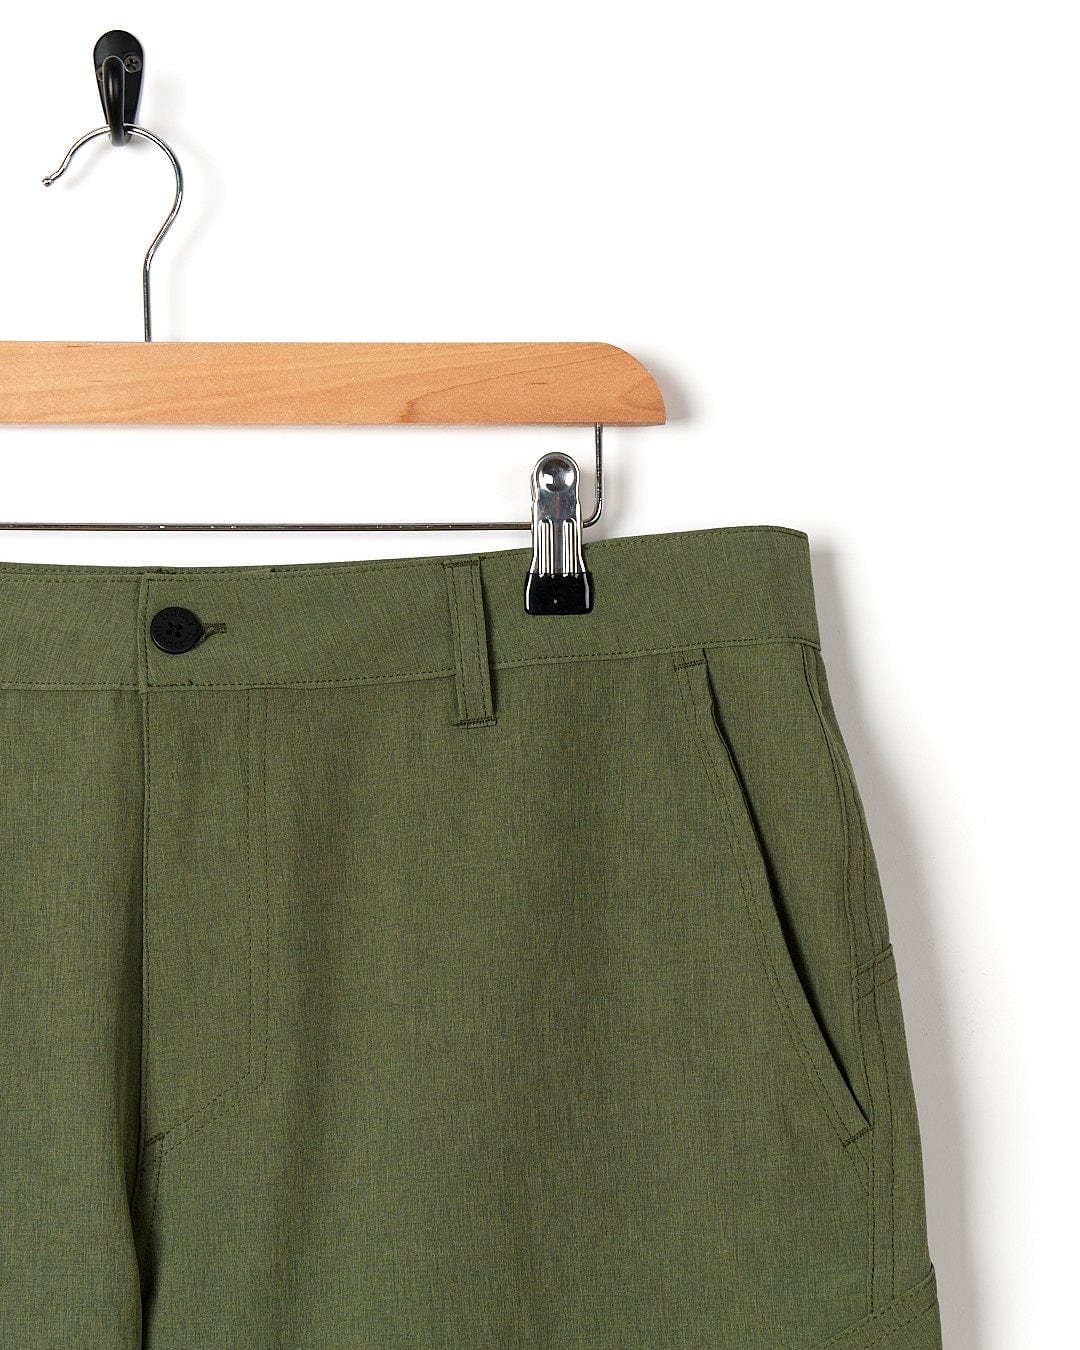 A pair of essential men's green Saltrock Cargo Amphibian II - Mens Boardshort - Dark Green shorts hanging on a hanger.